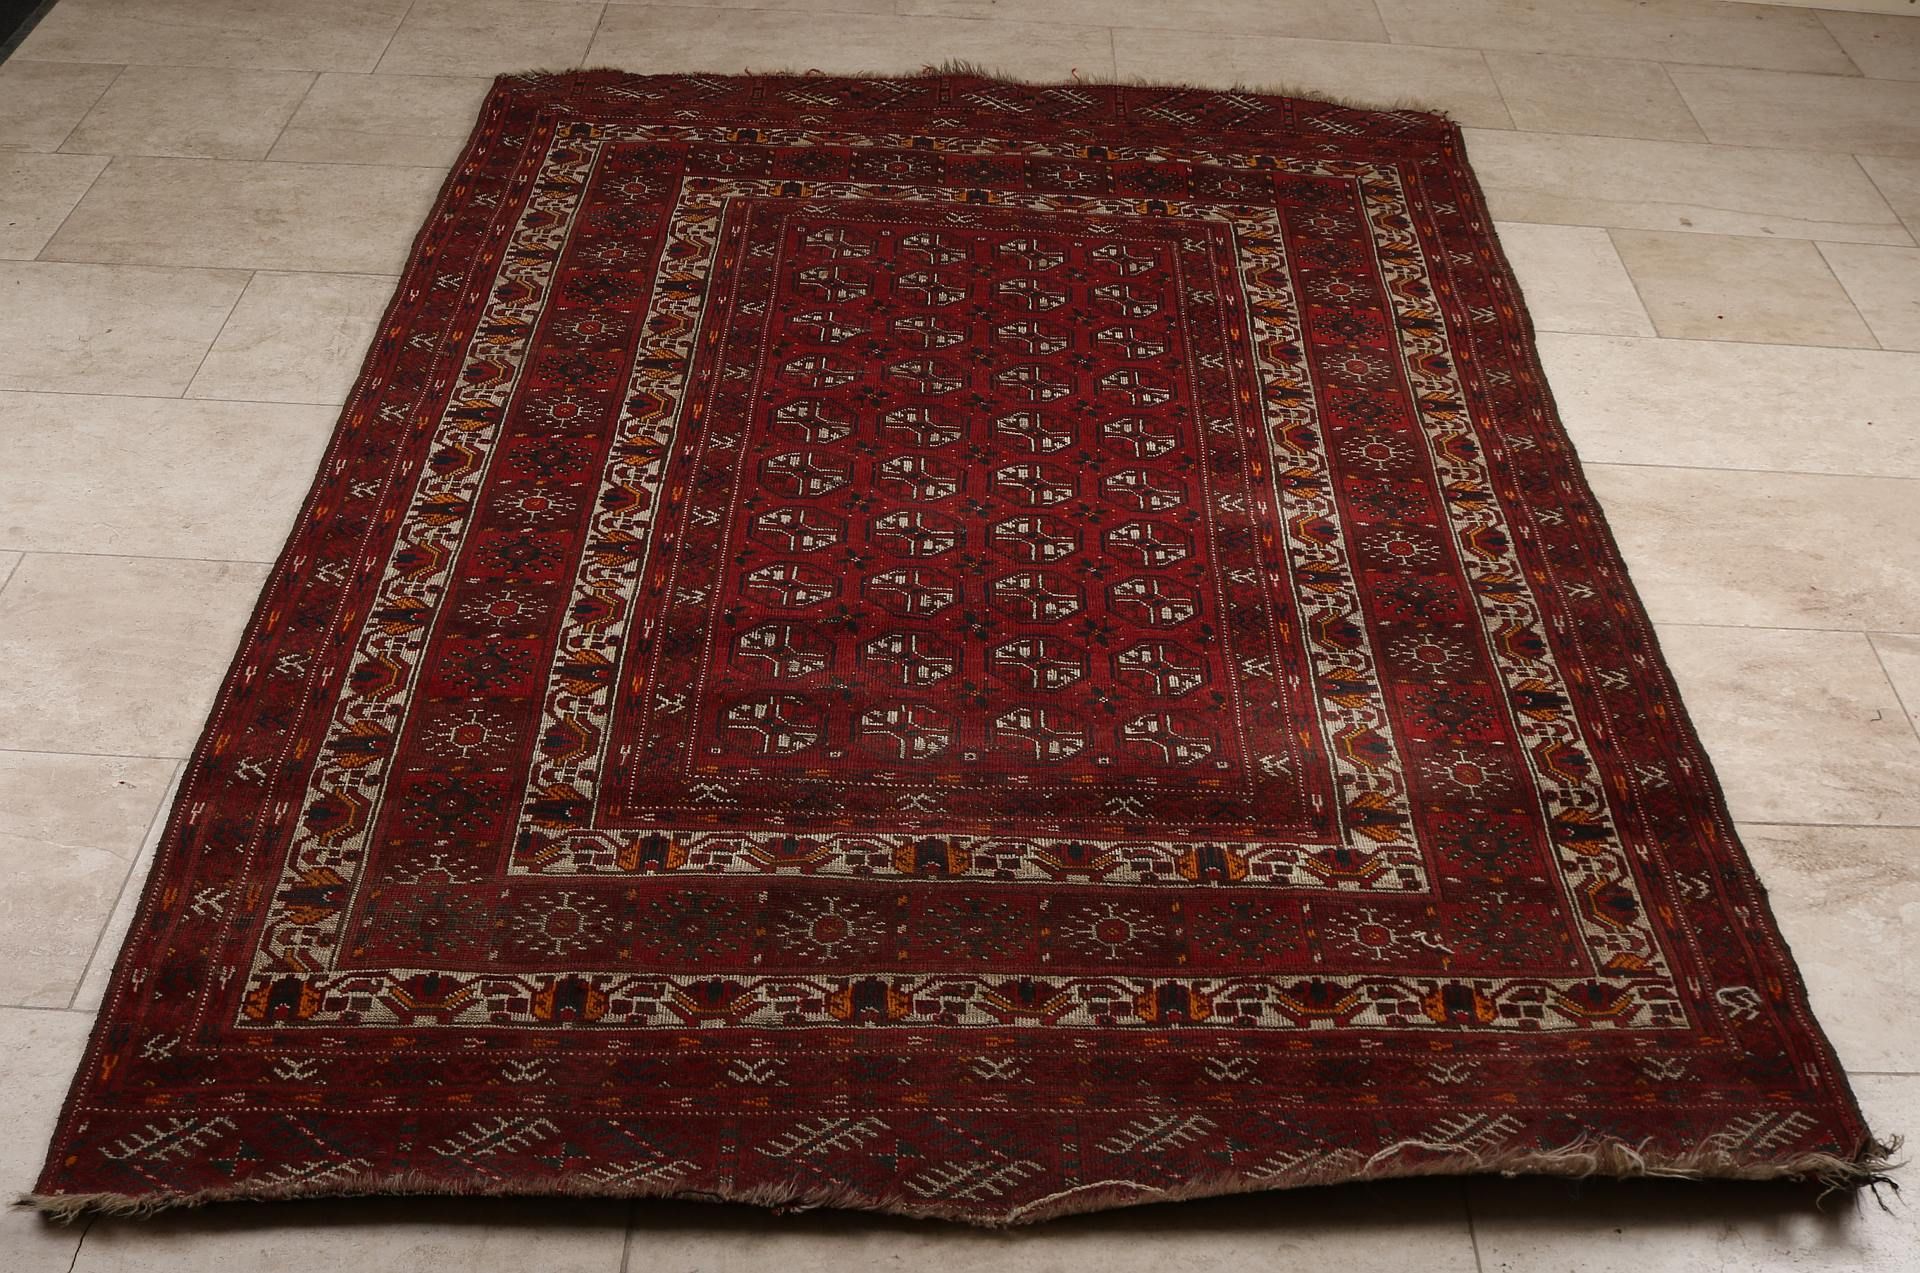 Persian carpet, 200 x 140 cm.